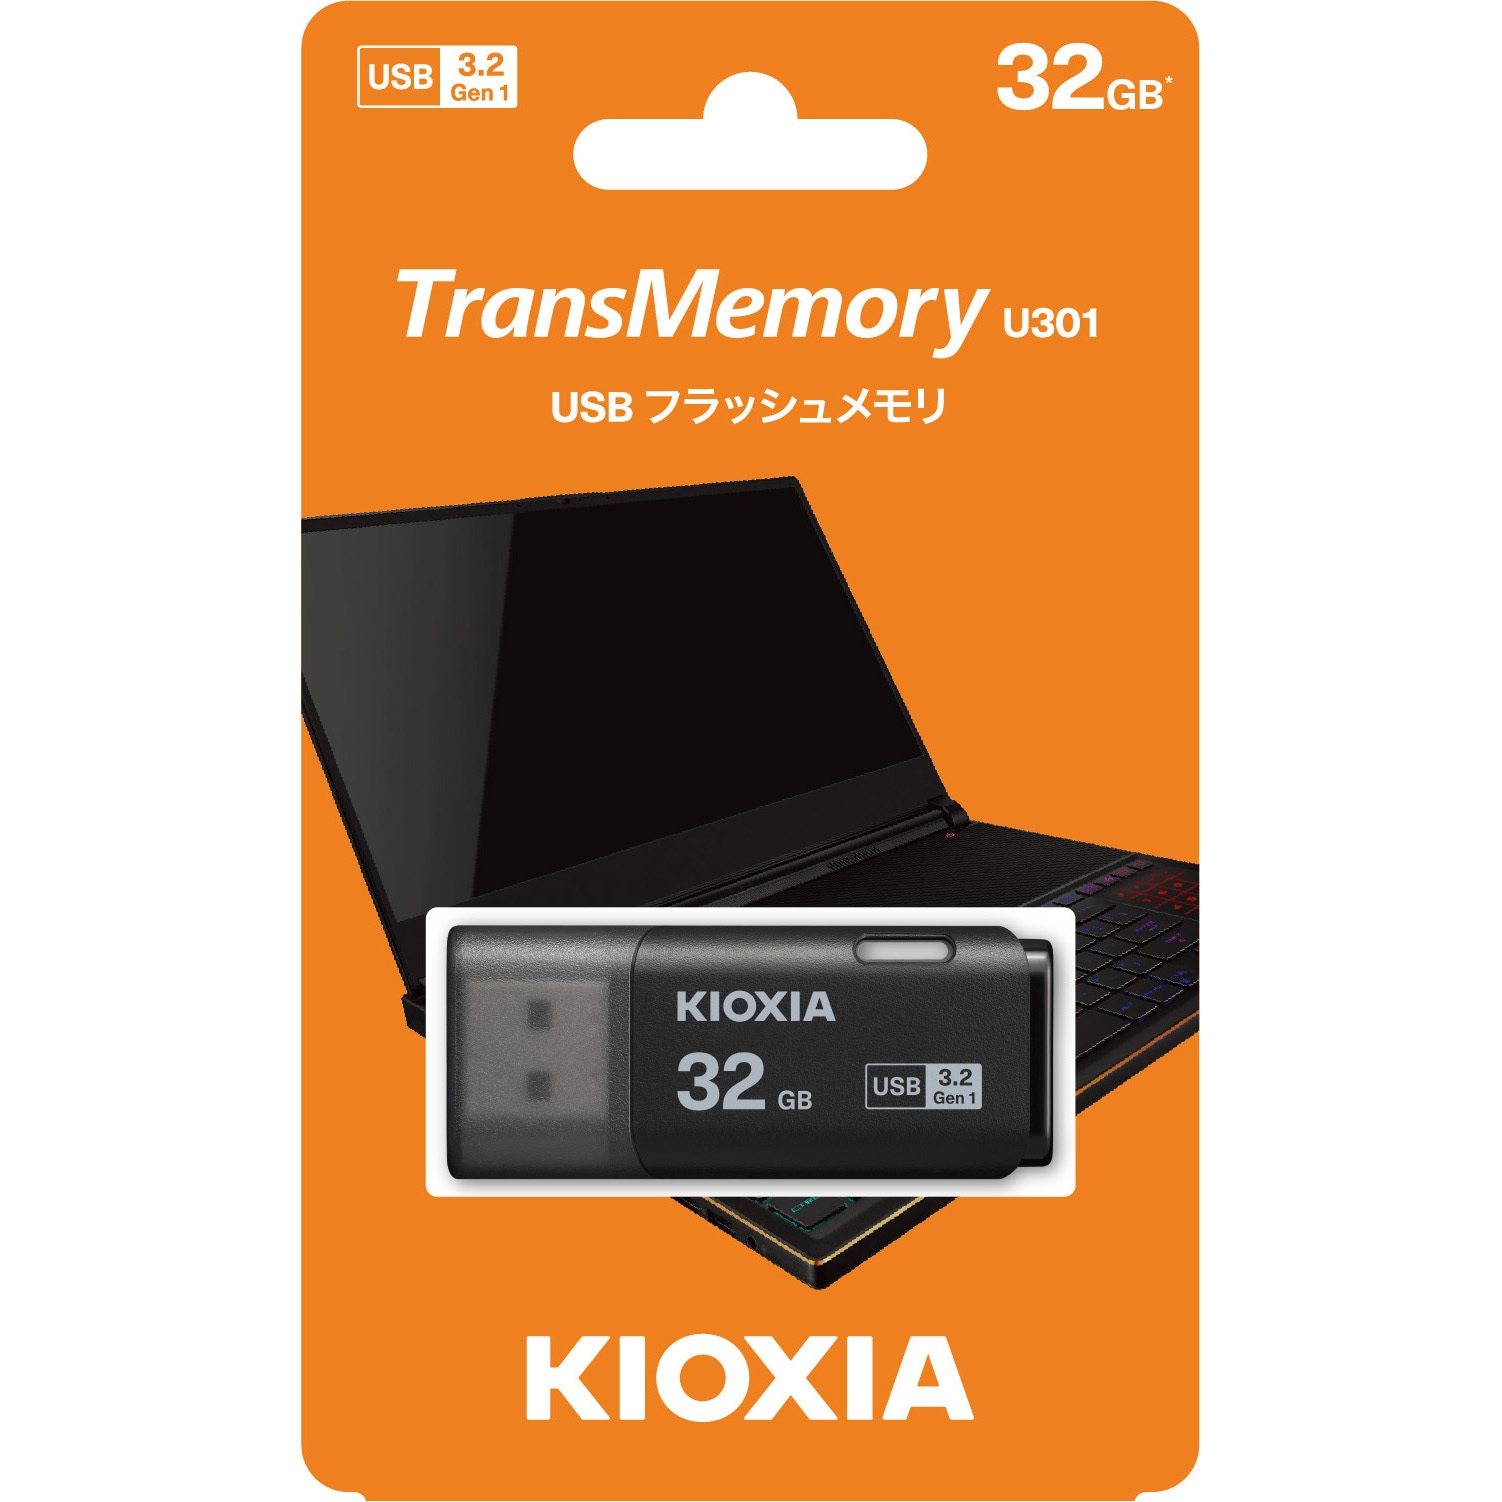 KIOXIA(キオクシア) 旧東芝メモリ USBフラッシュメモリ 32GB USB2.0 日本製 国内サポート正規品 KLU202A032GW